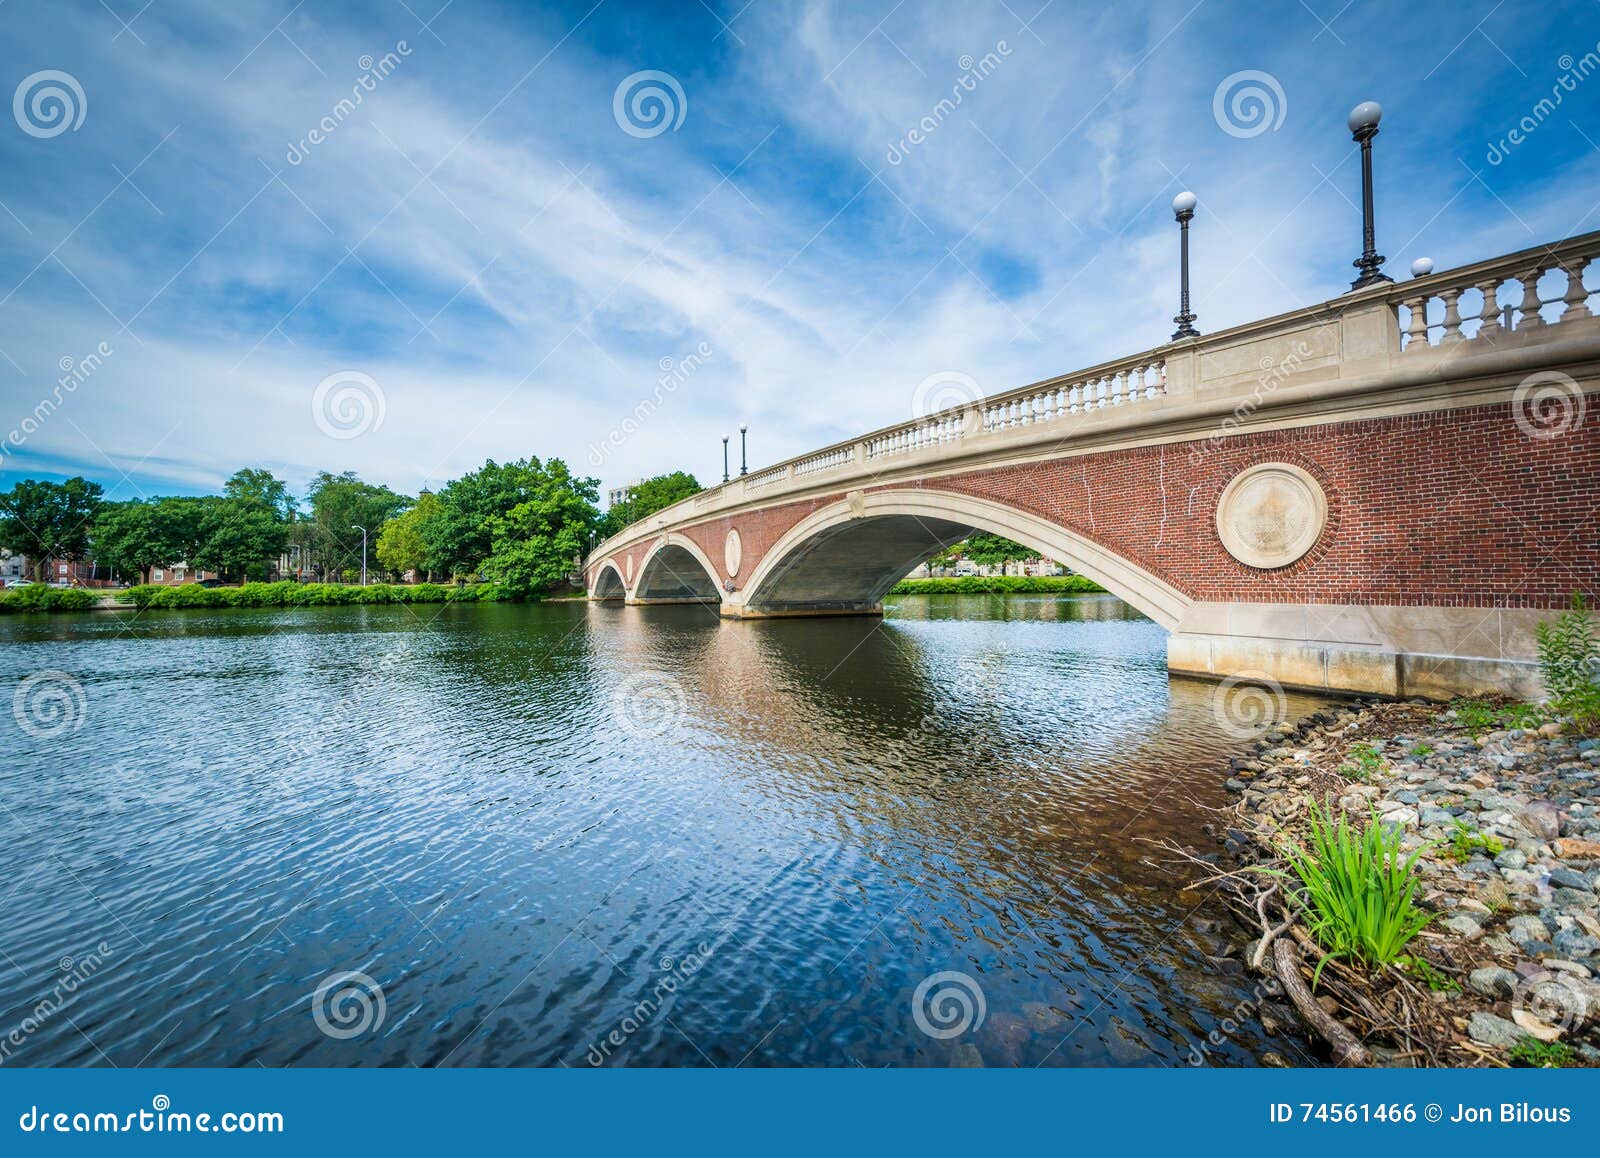 the john w weeks bridge and charles river in cambridge, massachusetts.